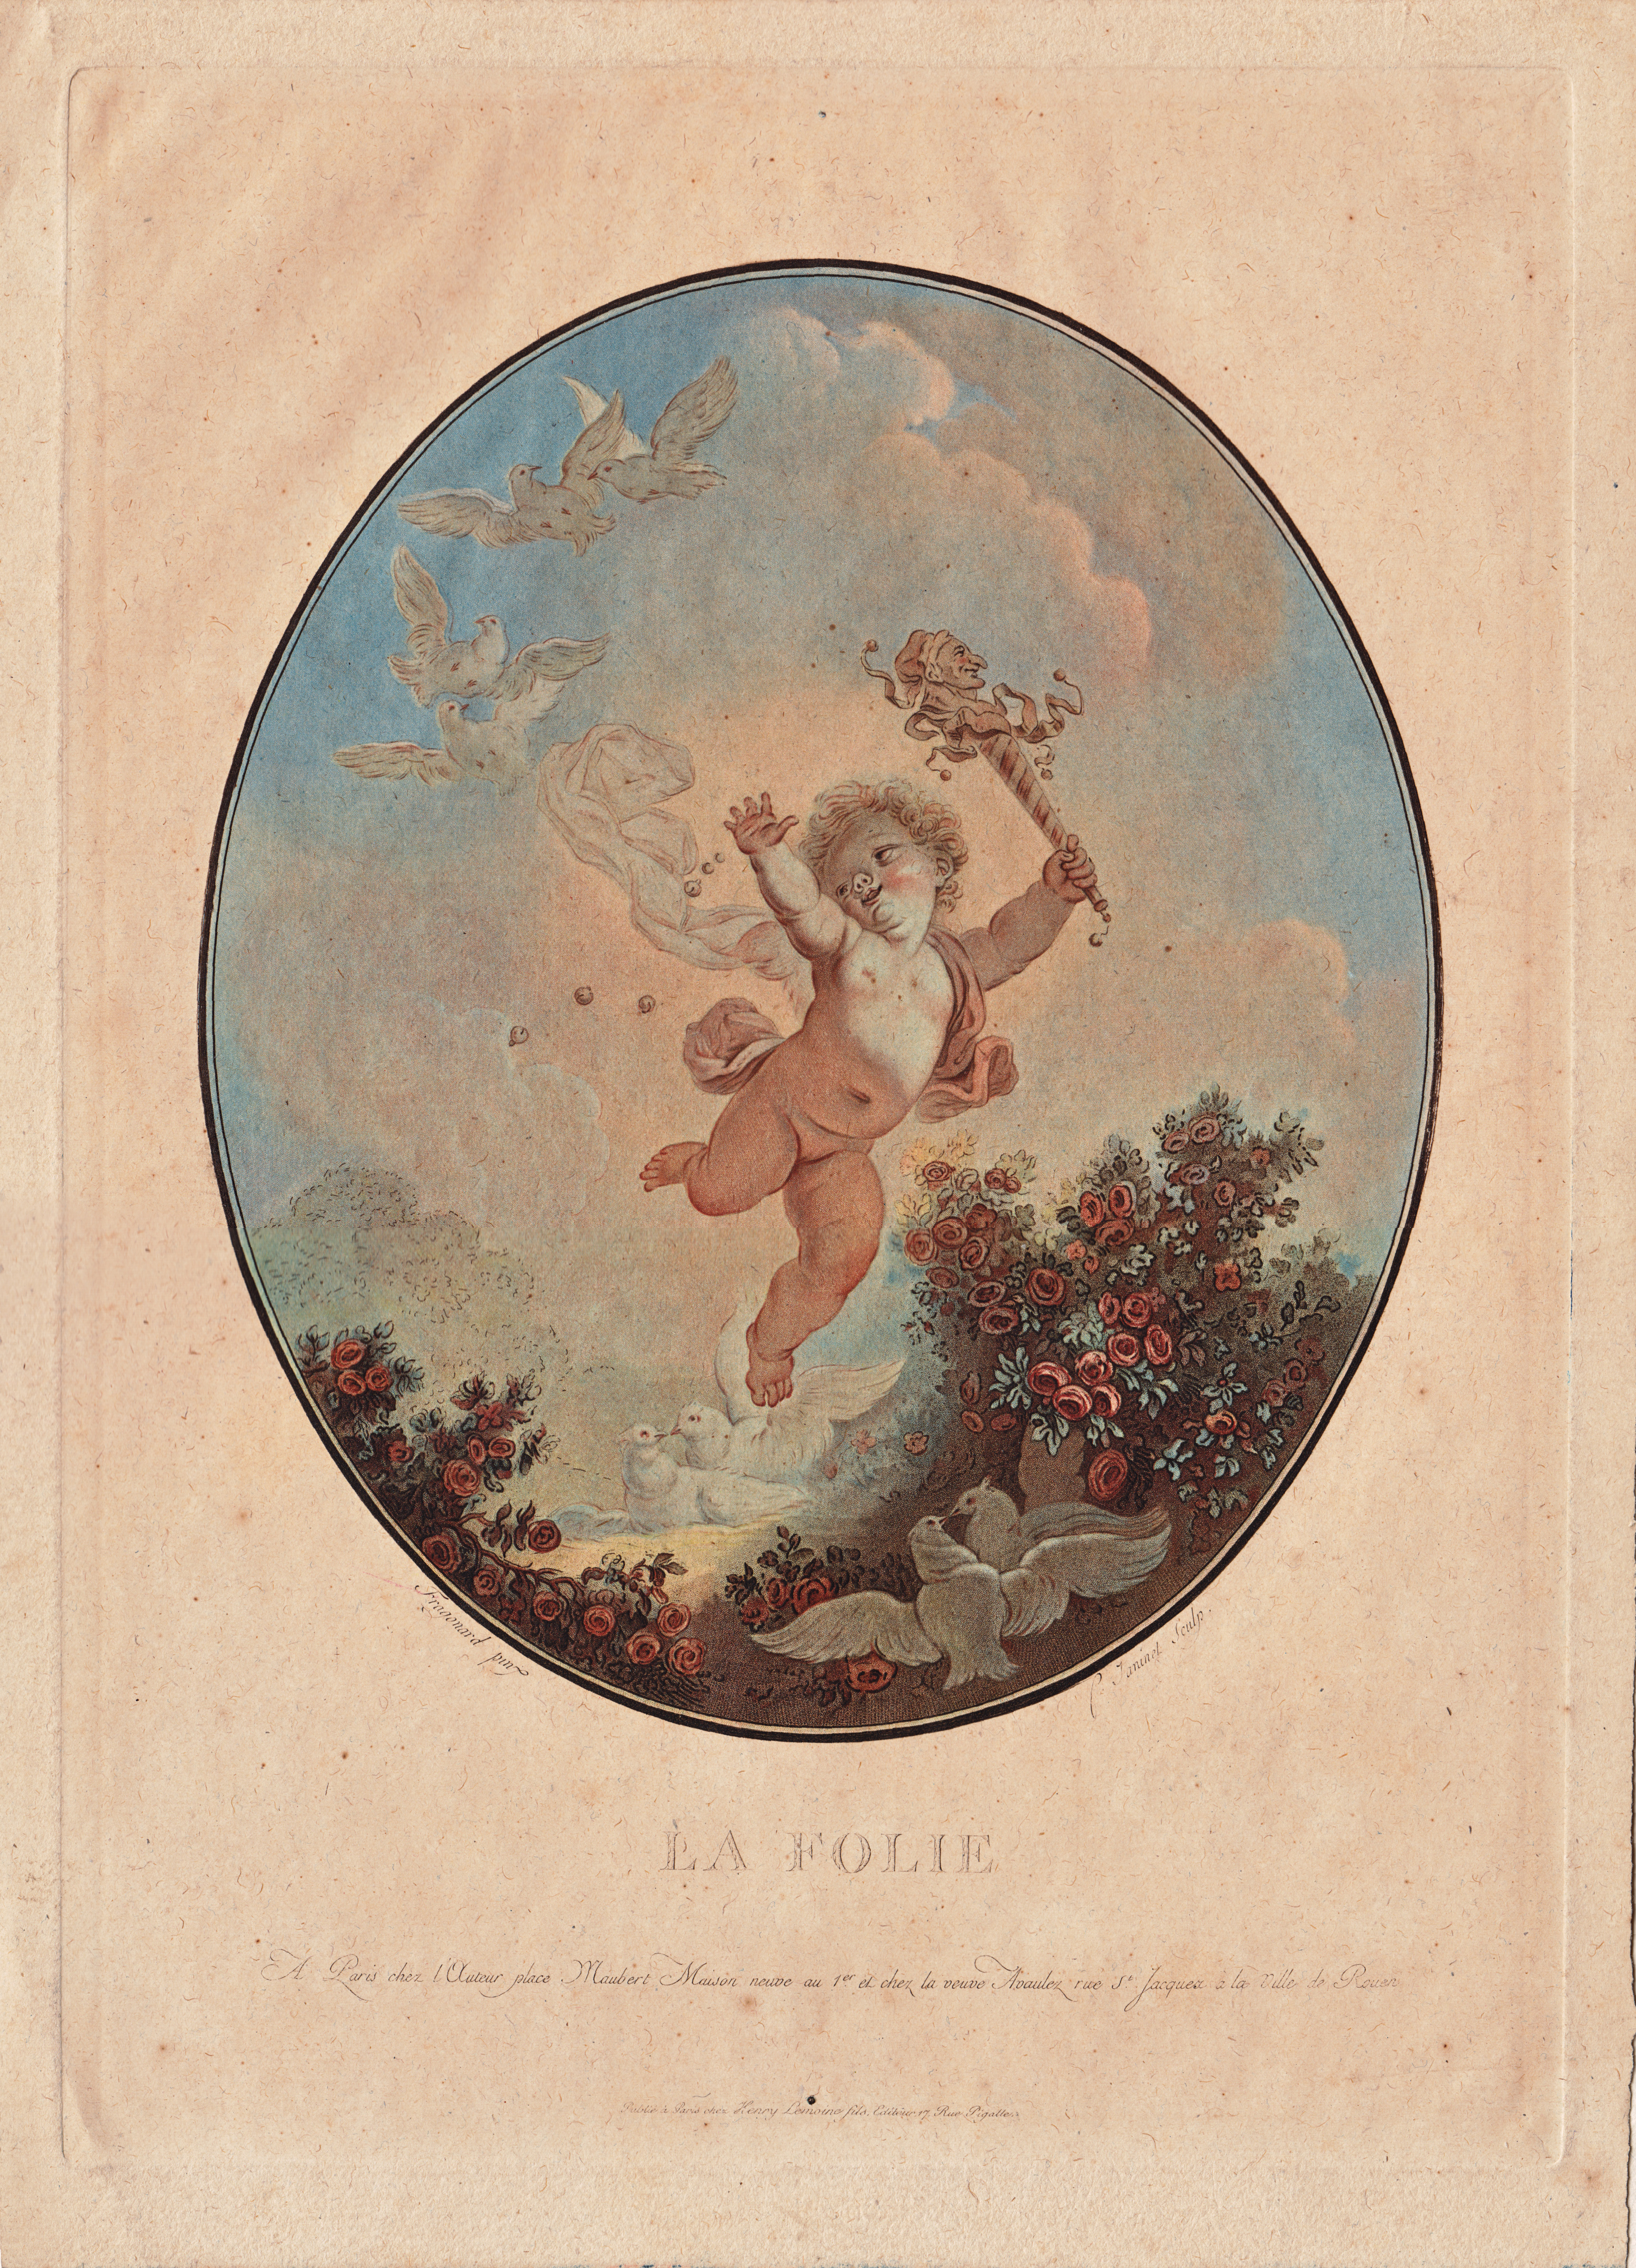 Jean-Franois Janinet, La Folie, etching and aquatint